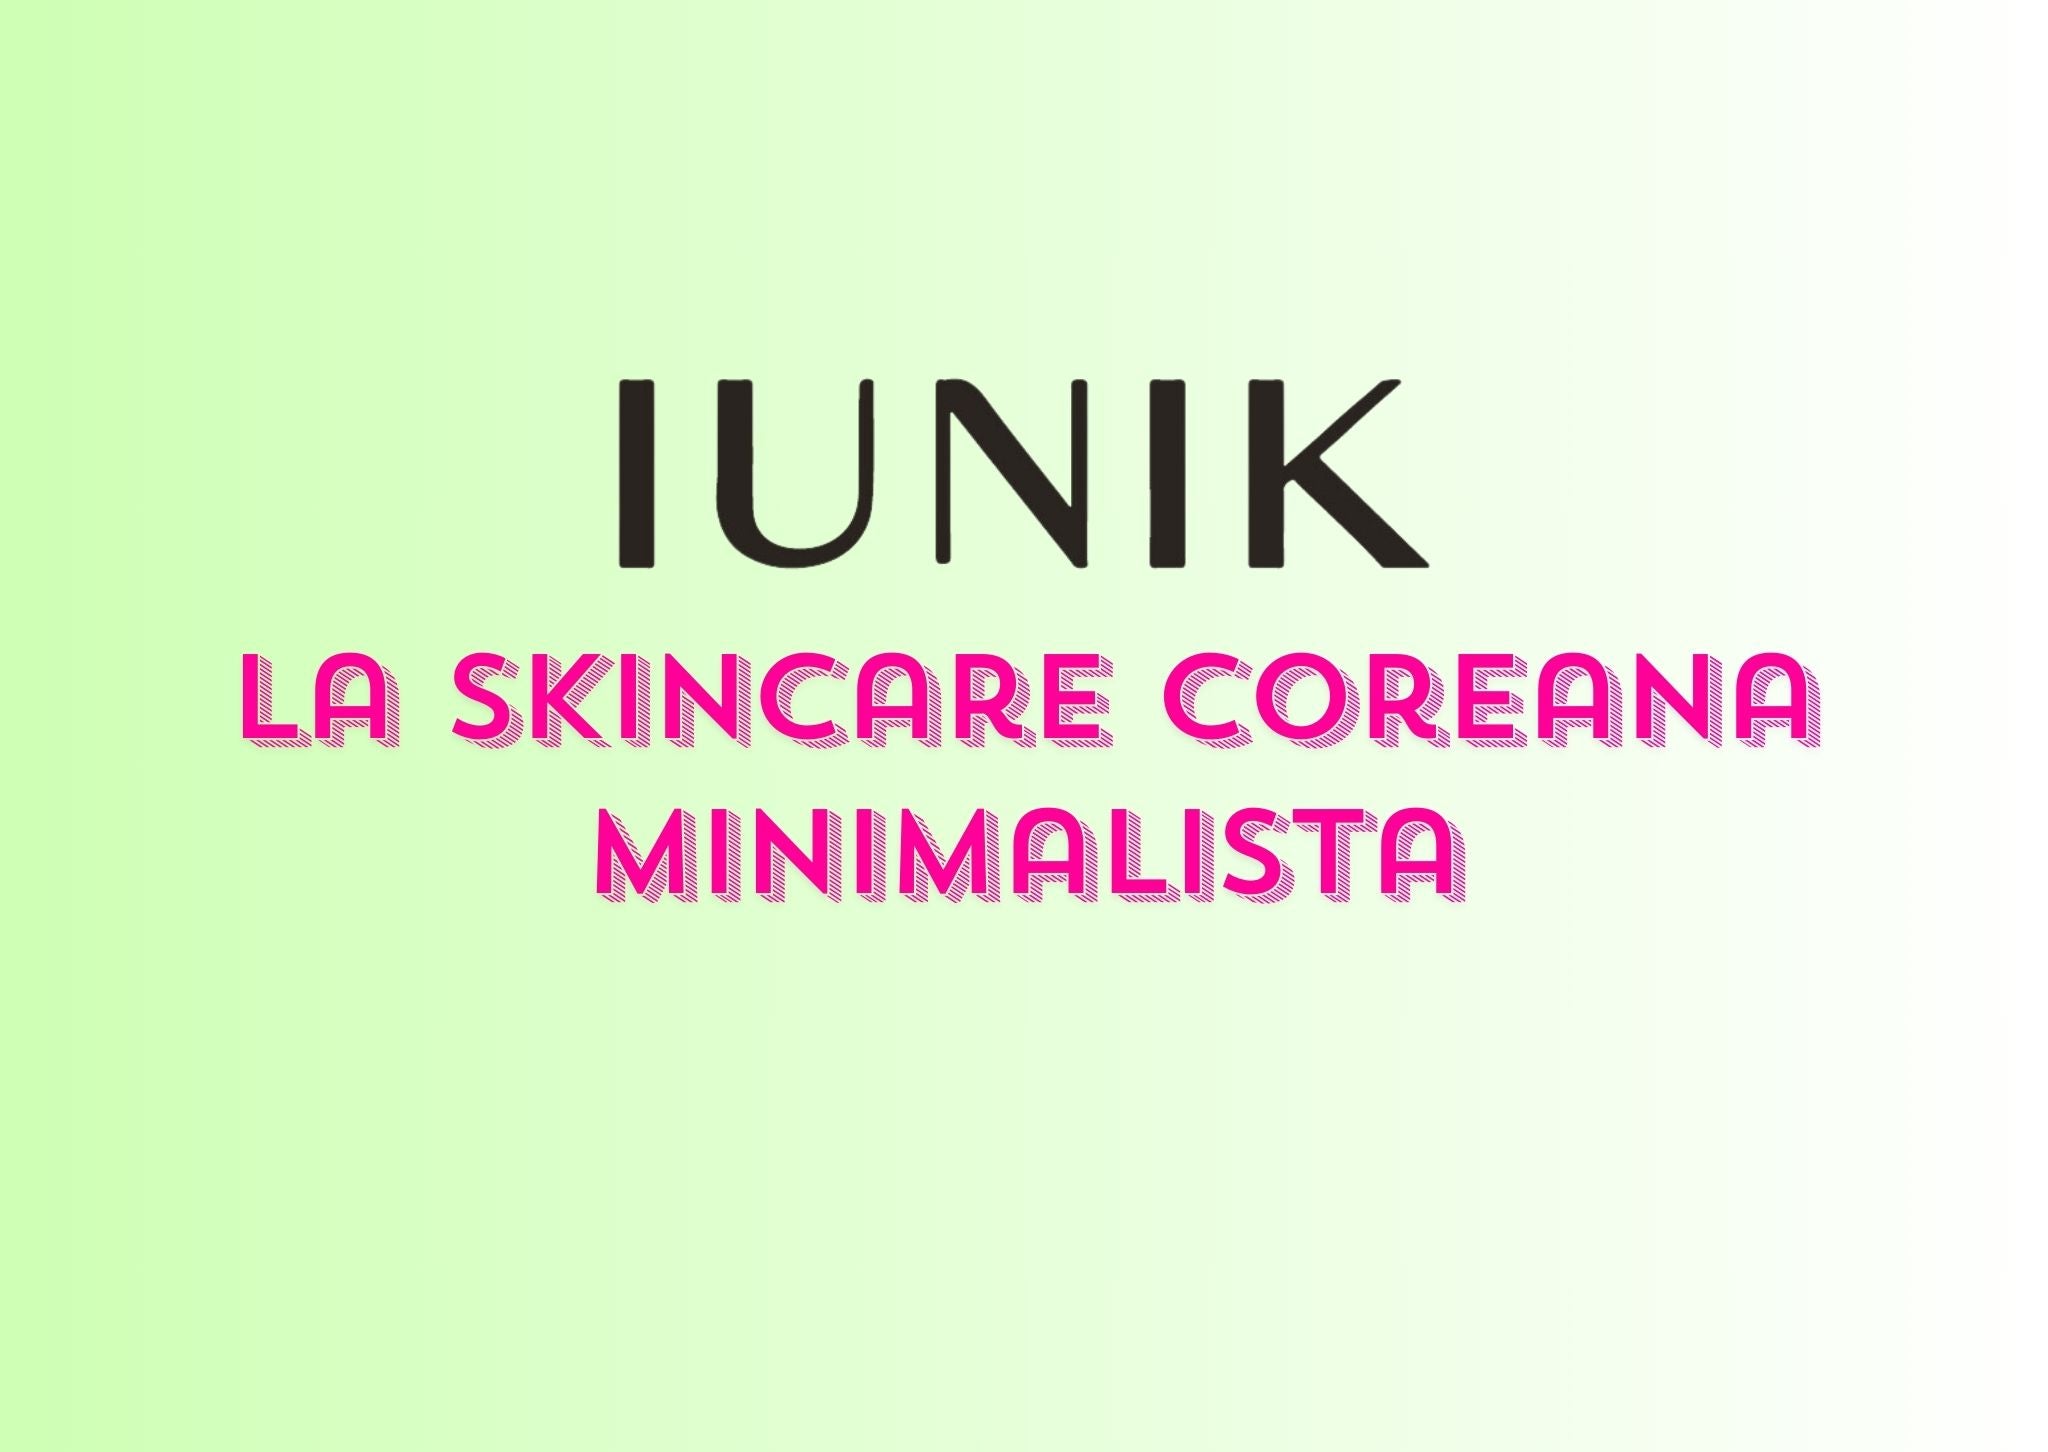 Iunik - Skincare Coreana Minimalista